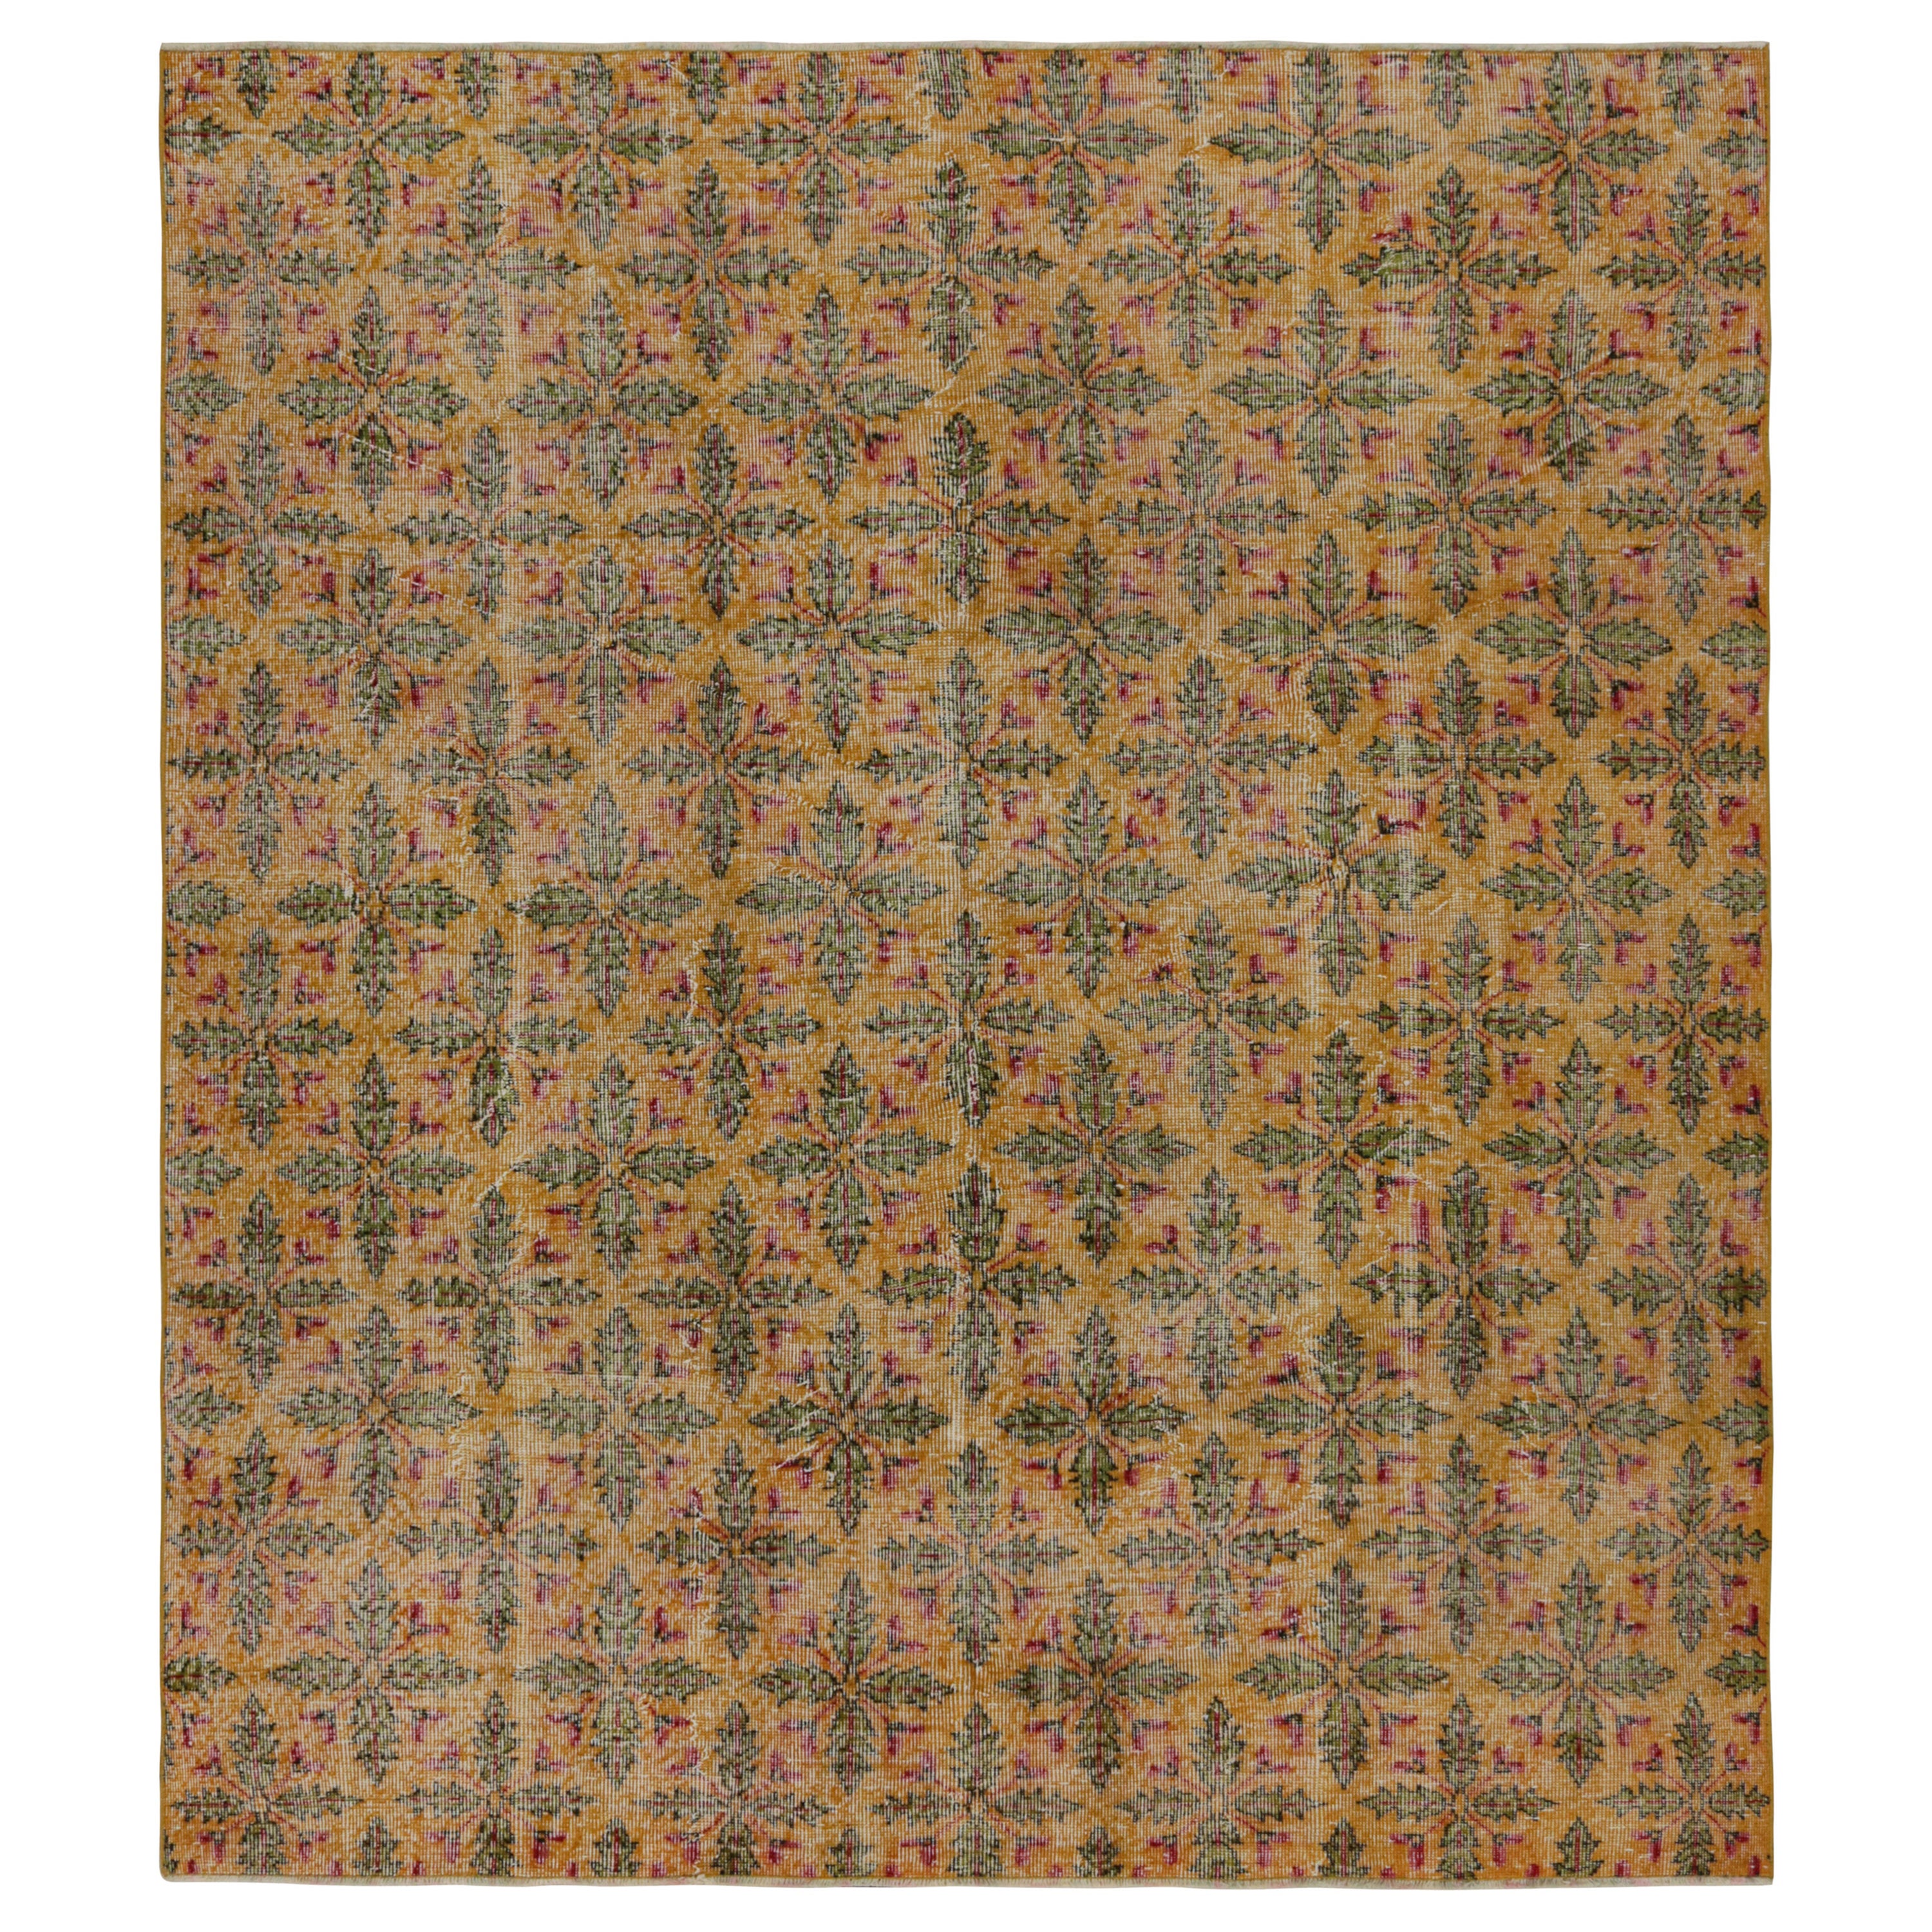 Vintage Zeki Müren Rug, with Geometric Patterns, from Rug & Kilim